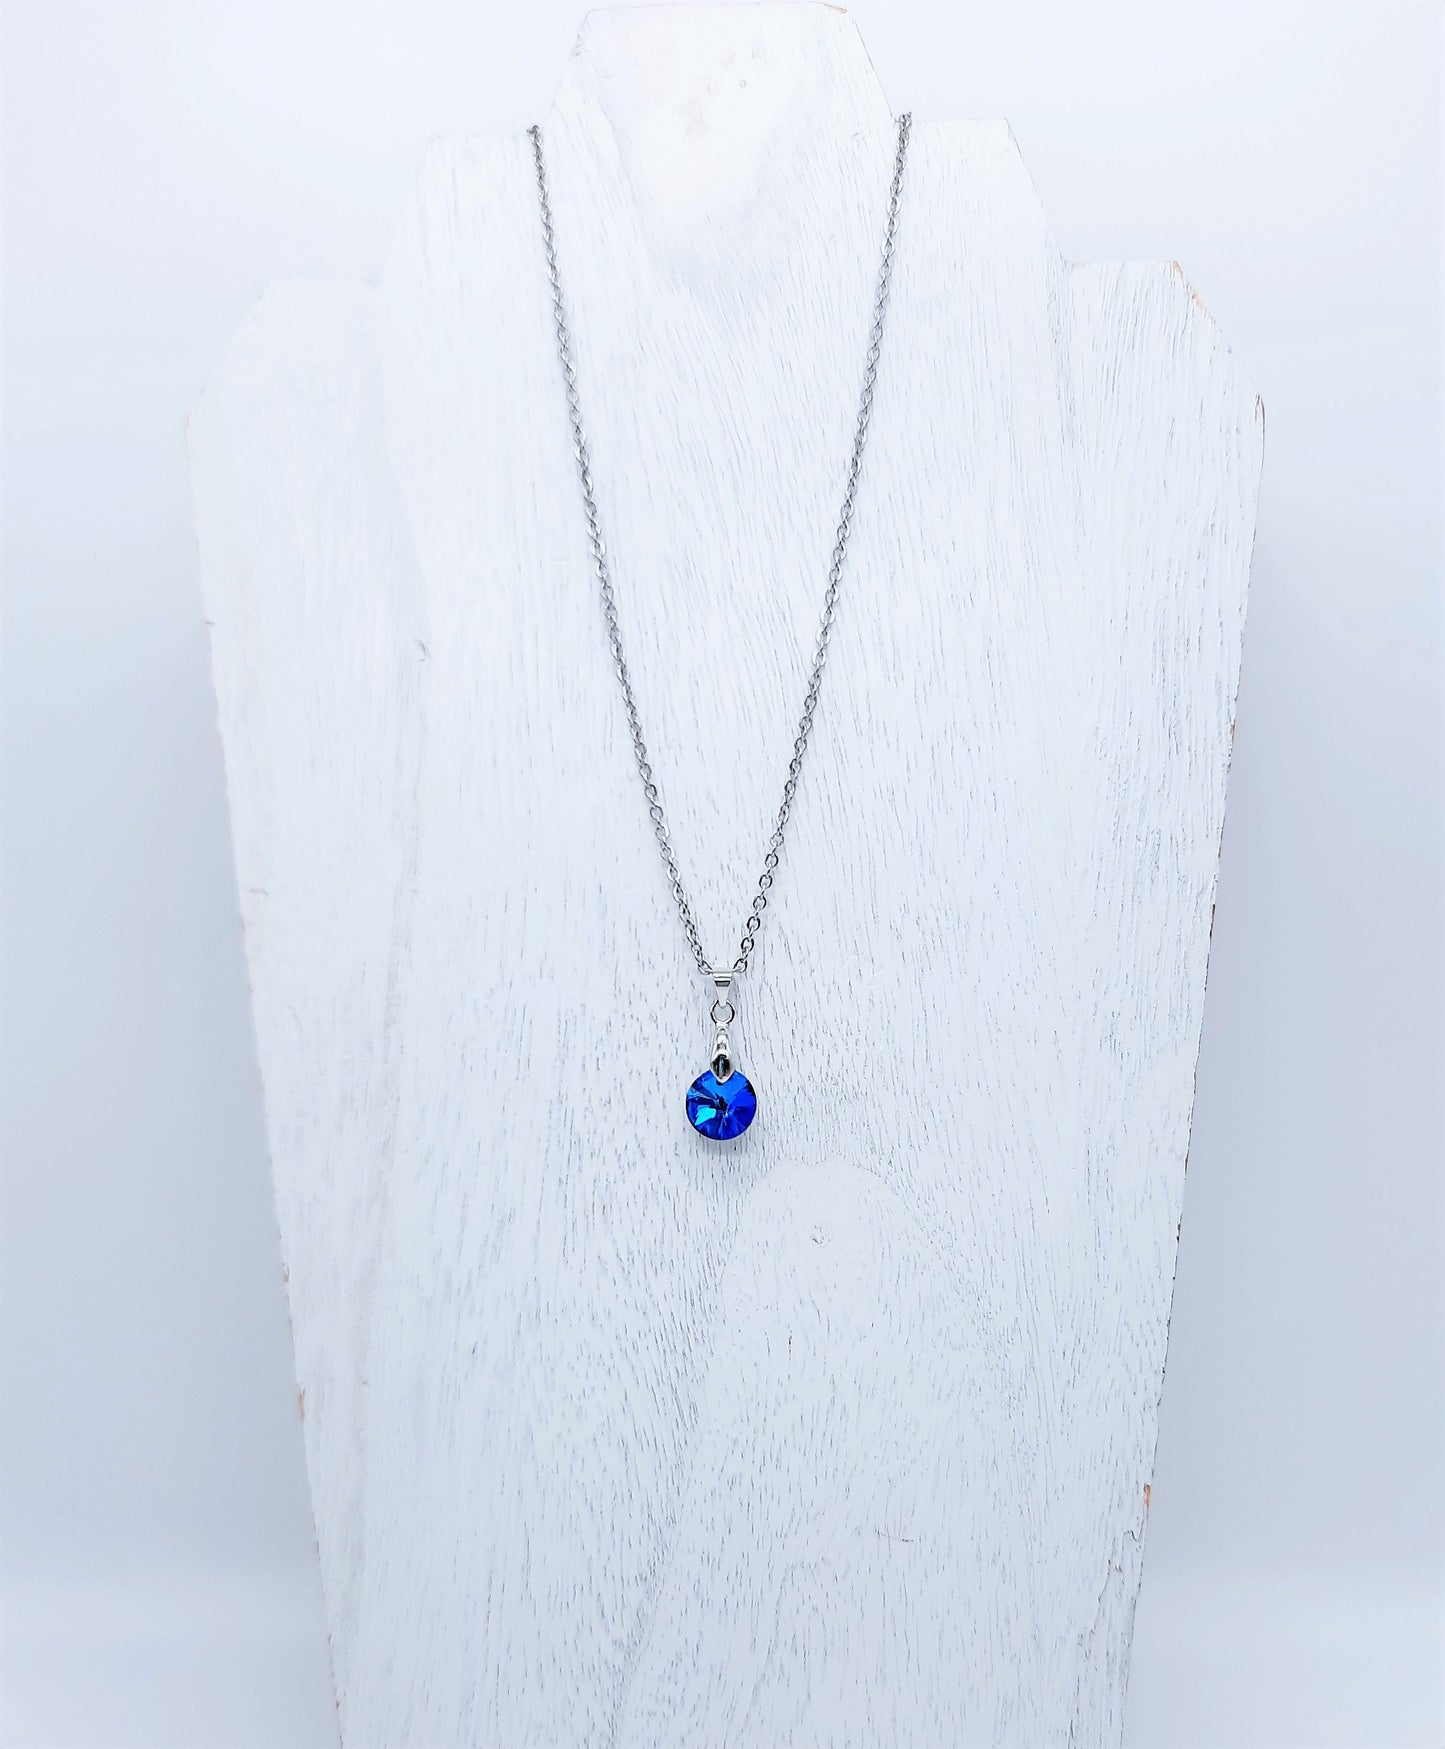 Handcrafted Multifaceted Bermuda Blue Round Glass Rhinestone Pendant Necklace - Hypoallergenic Stainless Steel Chain - Blue Zircon Look